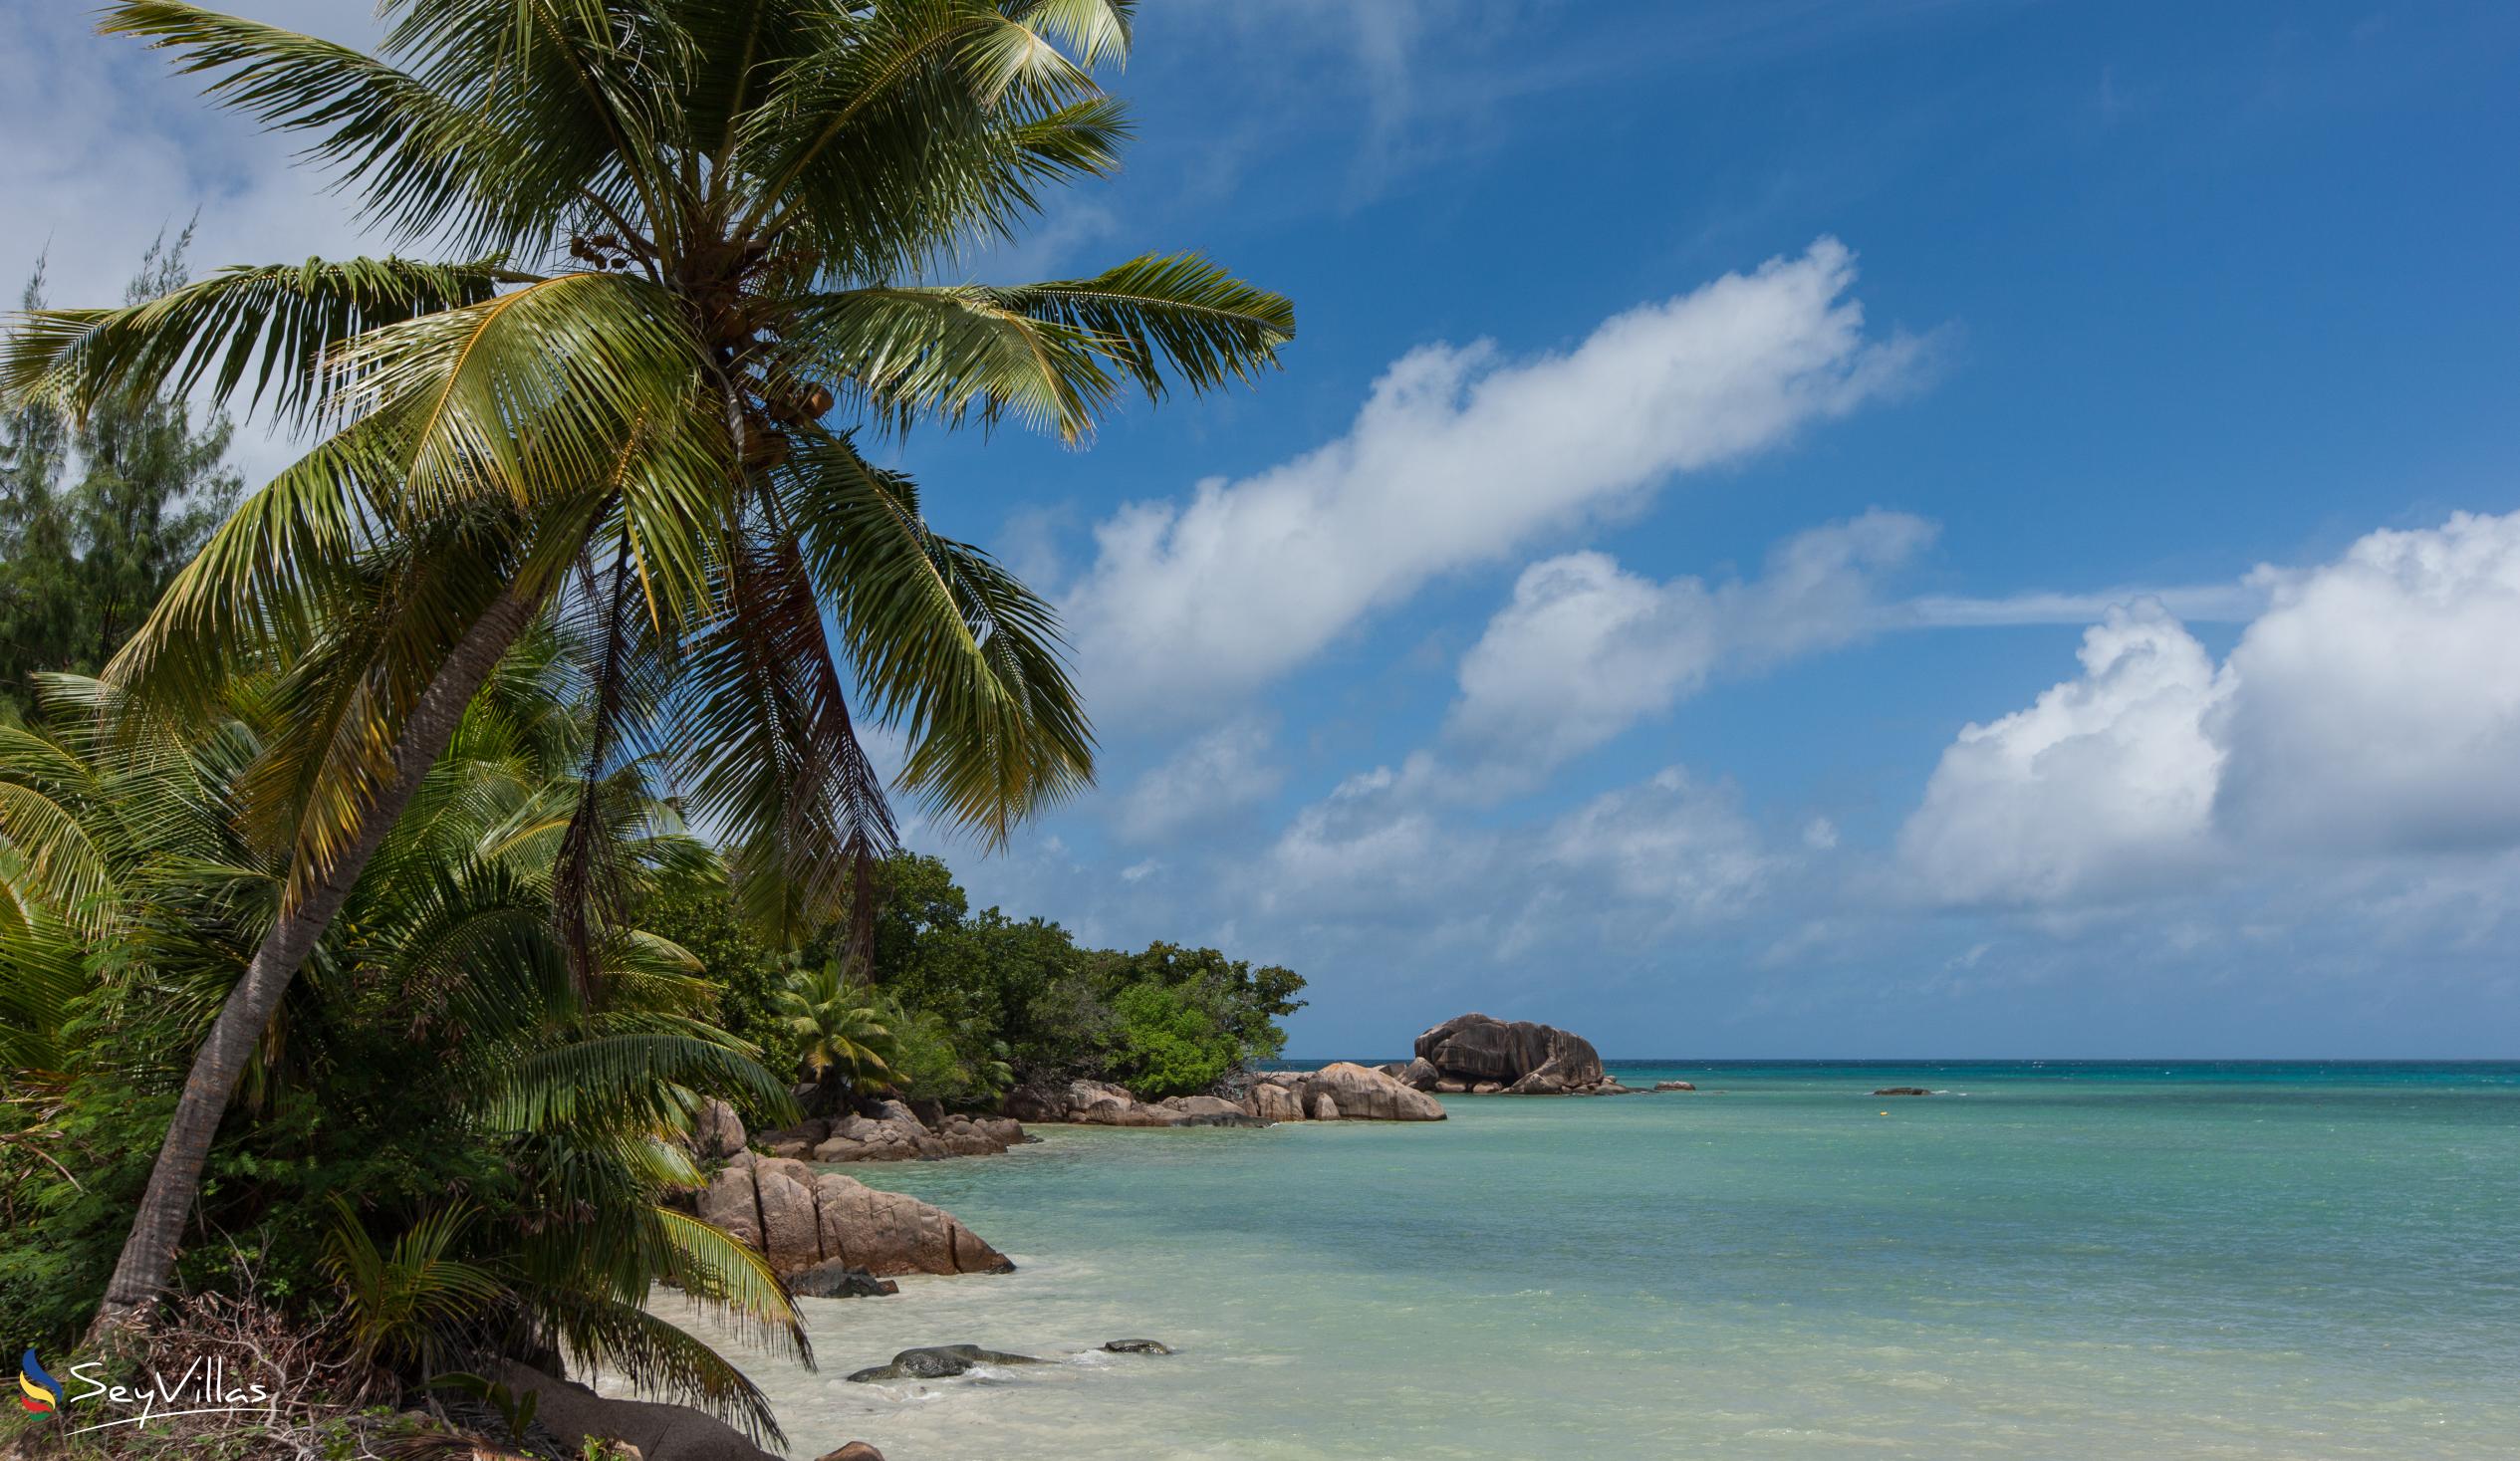 Foto 57: Villa Saint Sauveur - Posizione - Praslin (Seychelles)